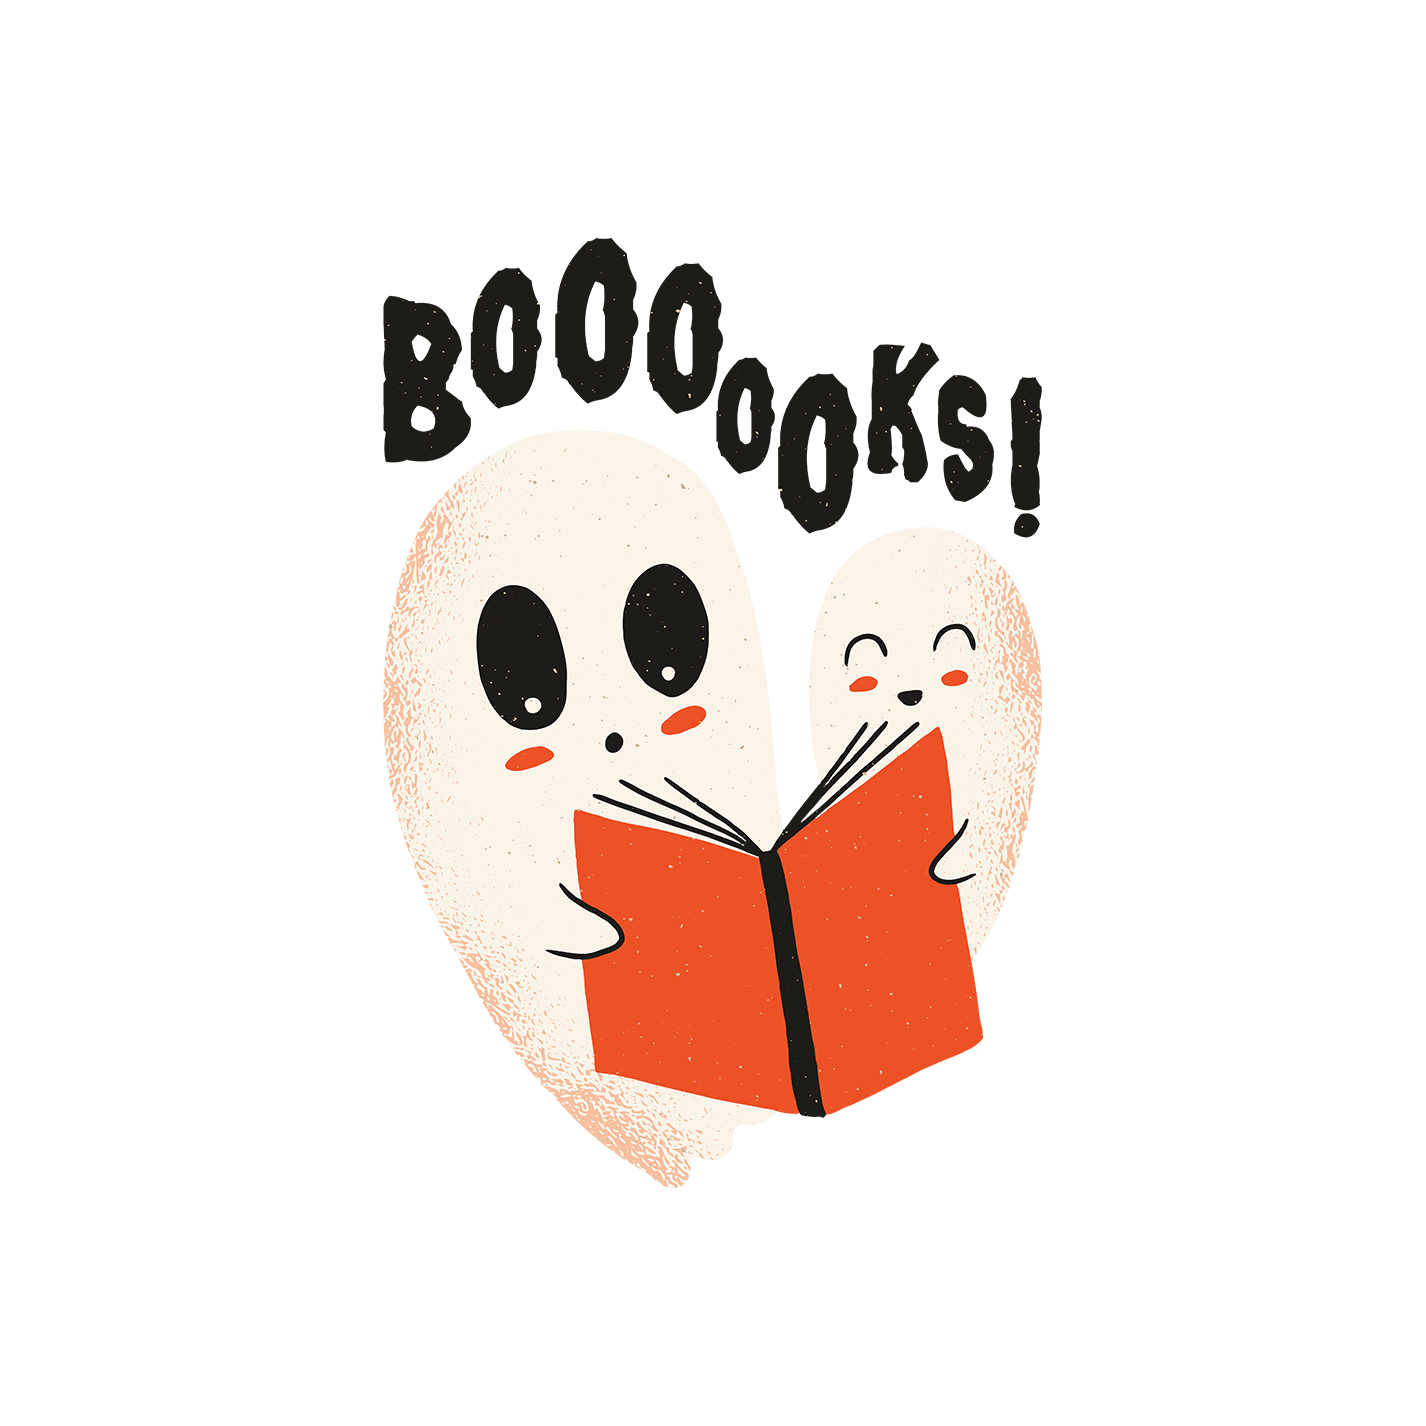 Books ghosts | Unisex Hoodie